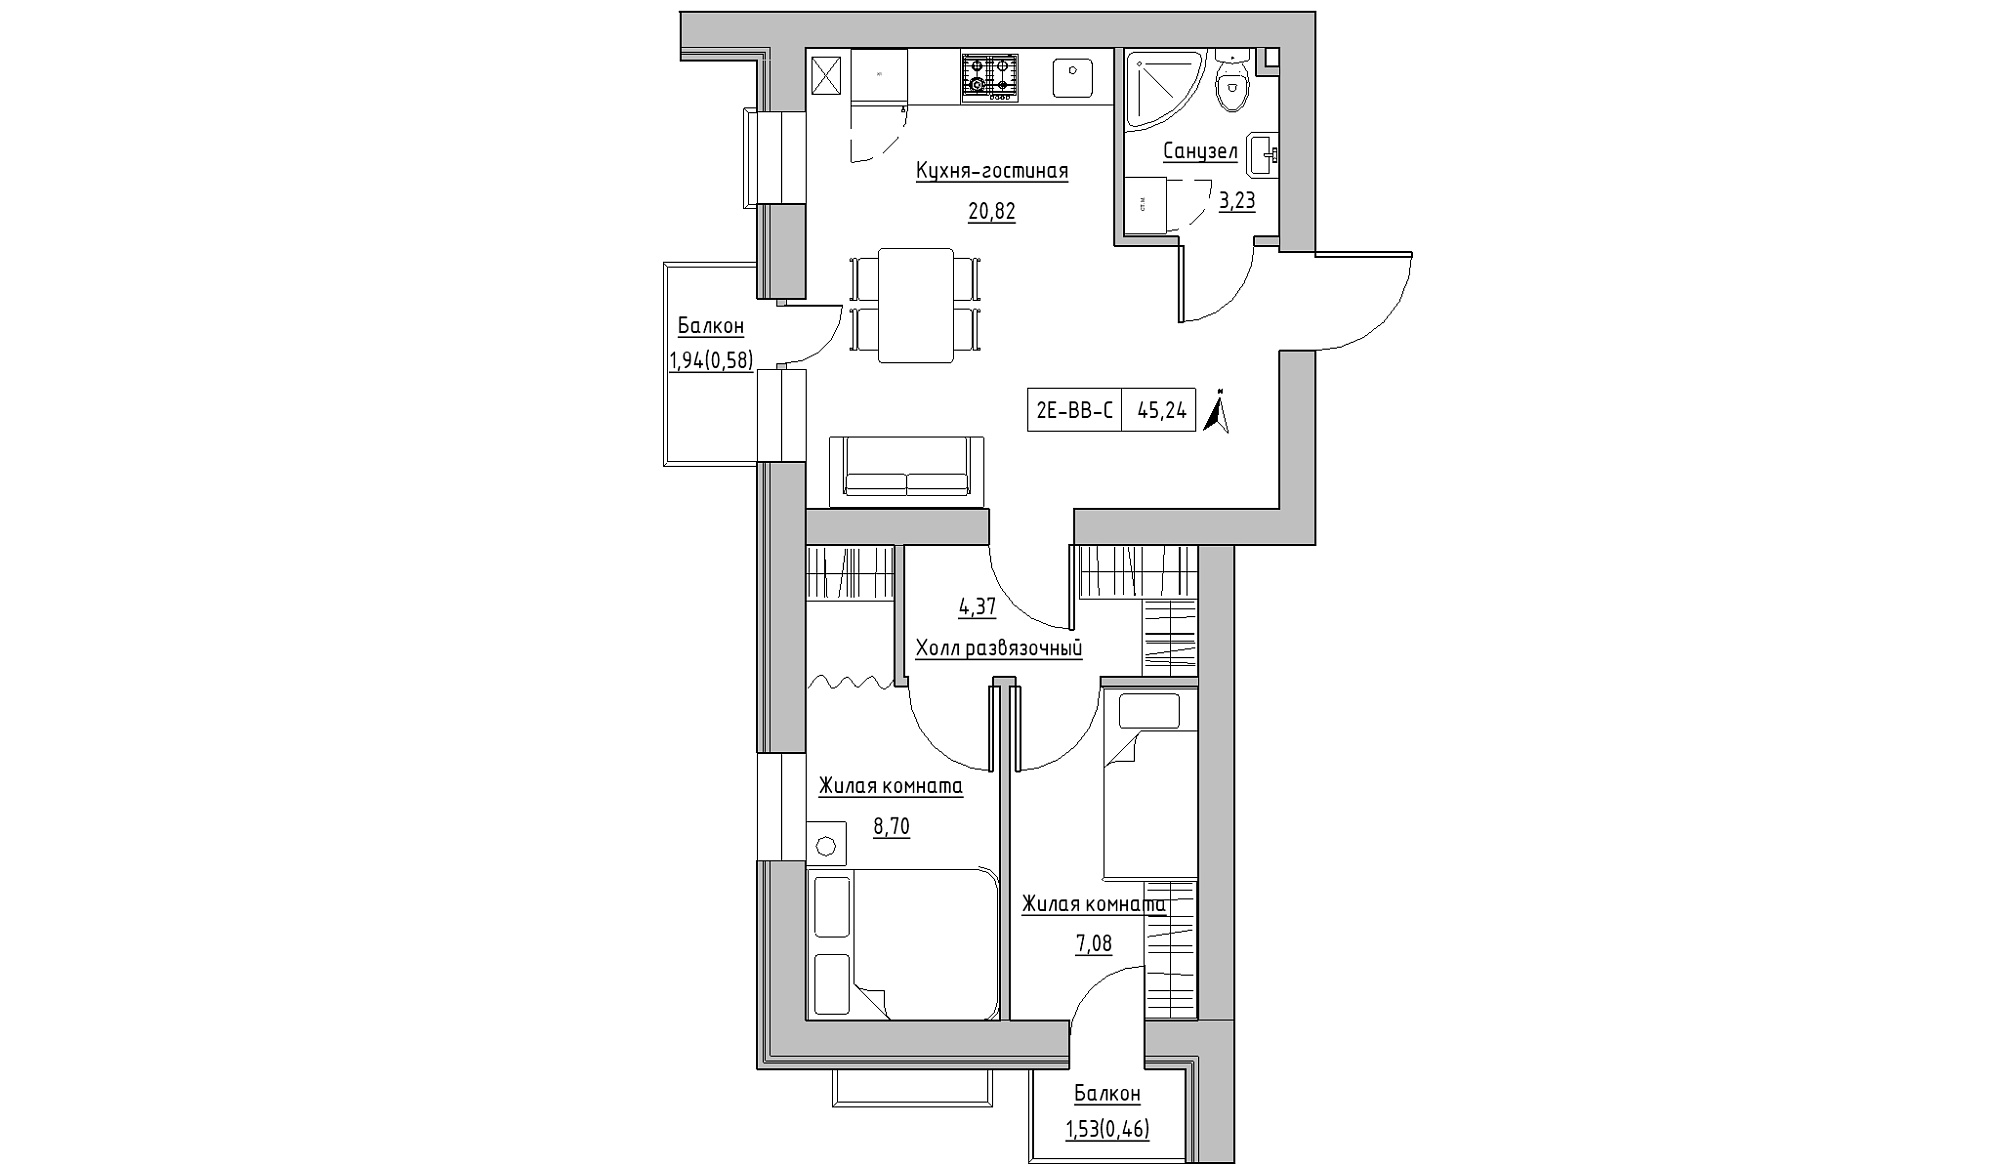 Planning 2-rm flats area 45.24m2, KS-016-05/0011.